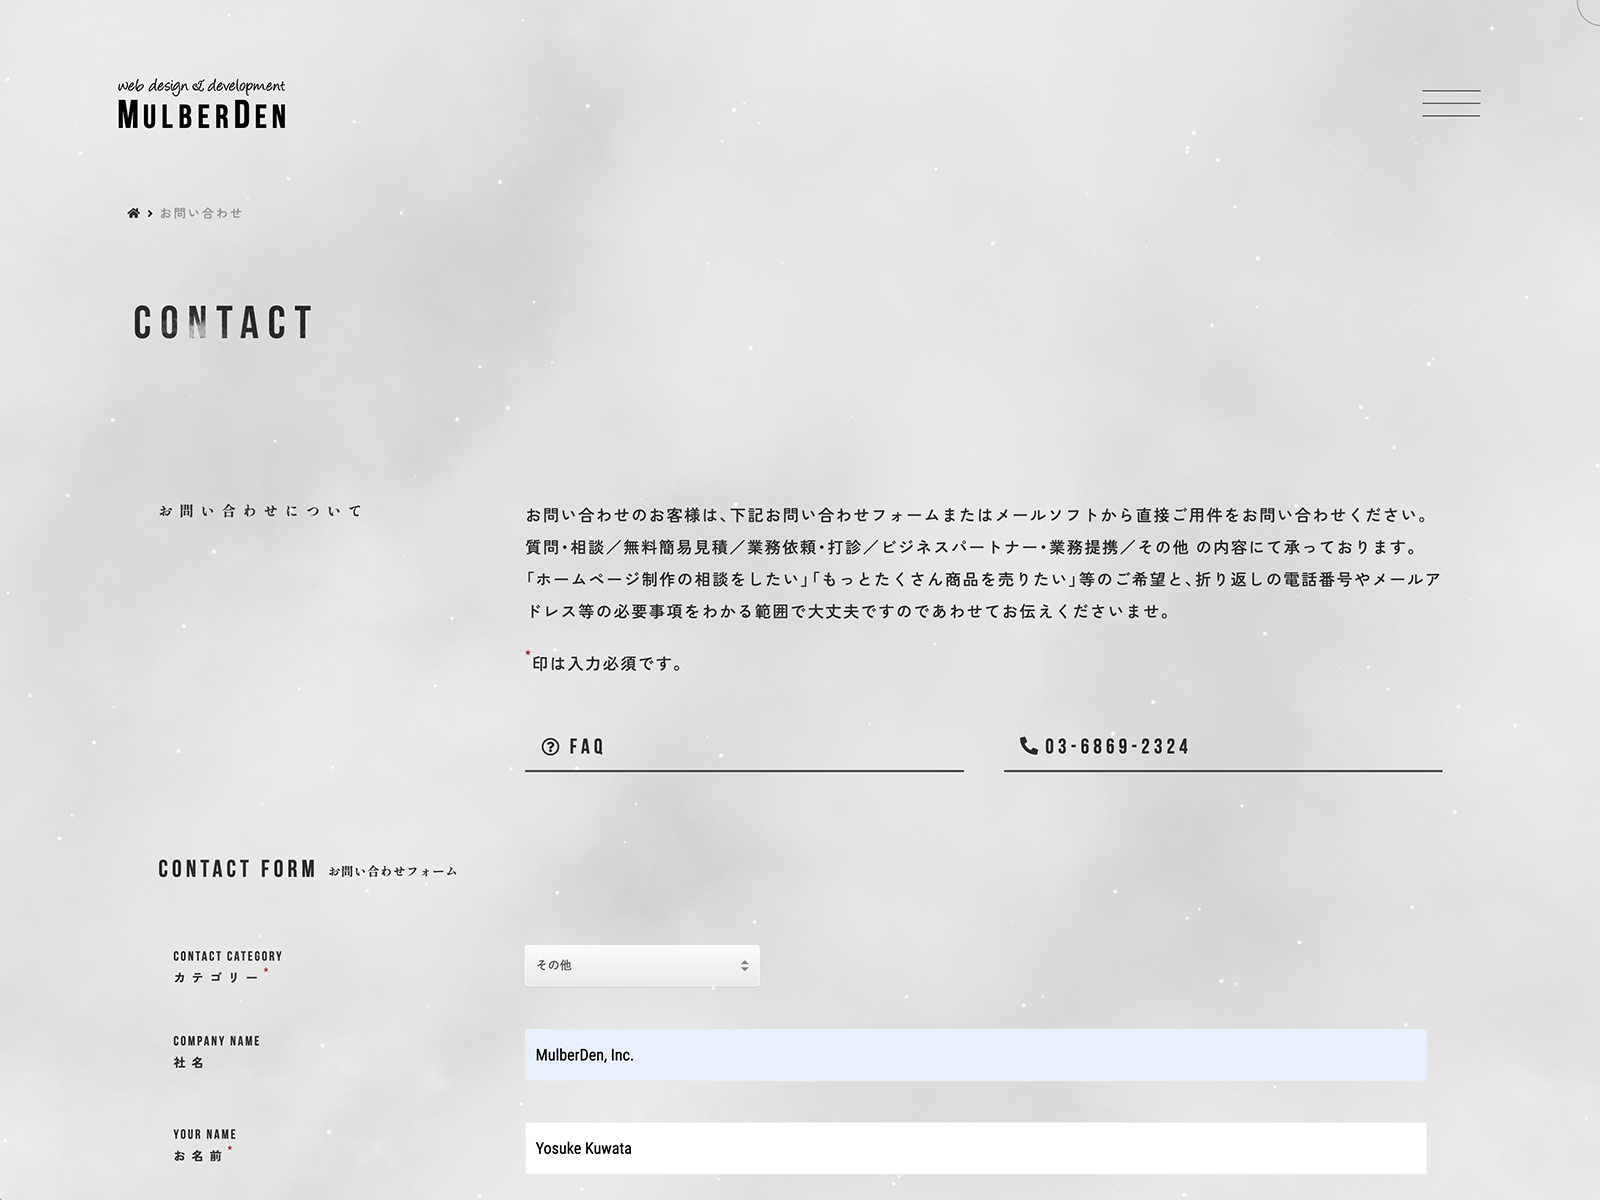 Ajax contact form by AWS Lambda, Ajax FAQ search form